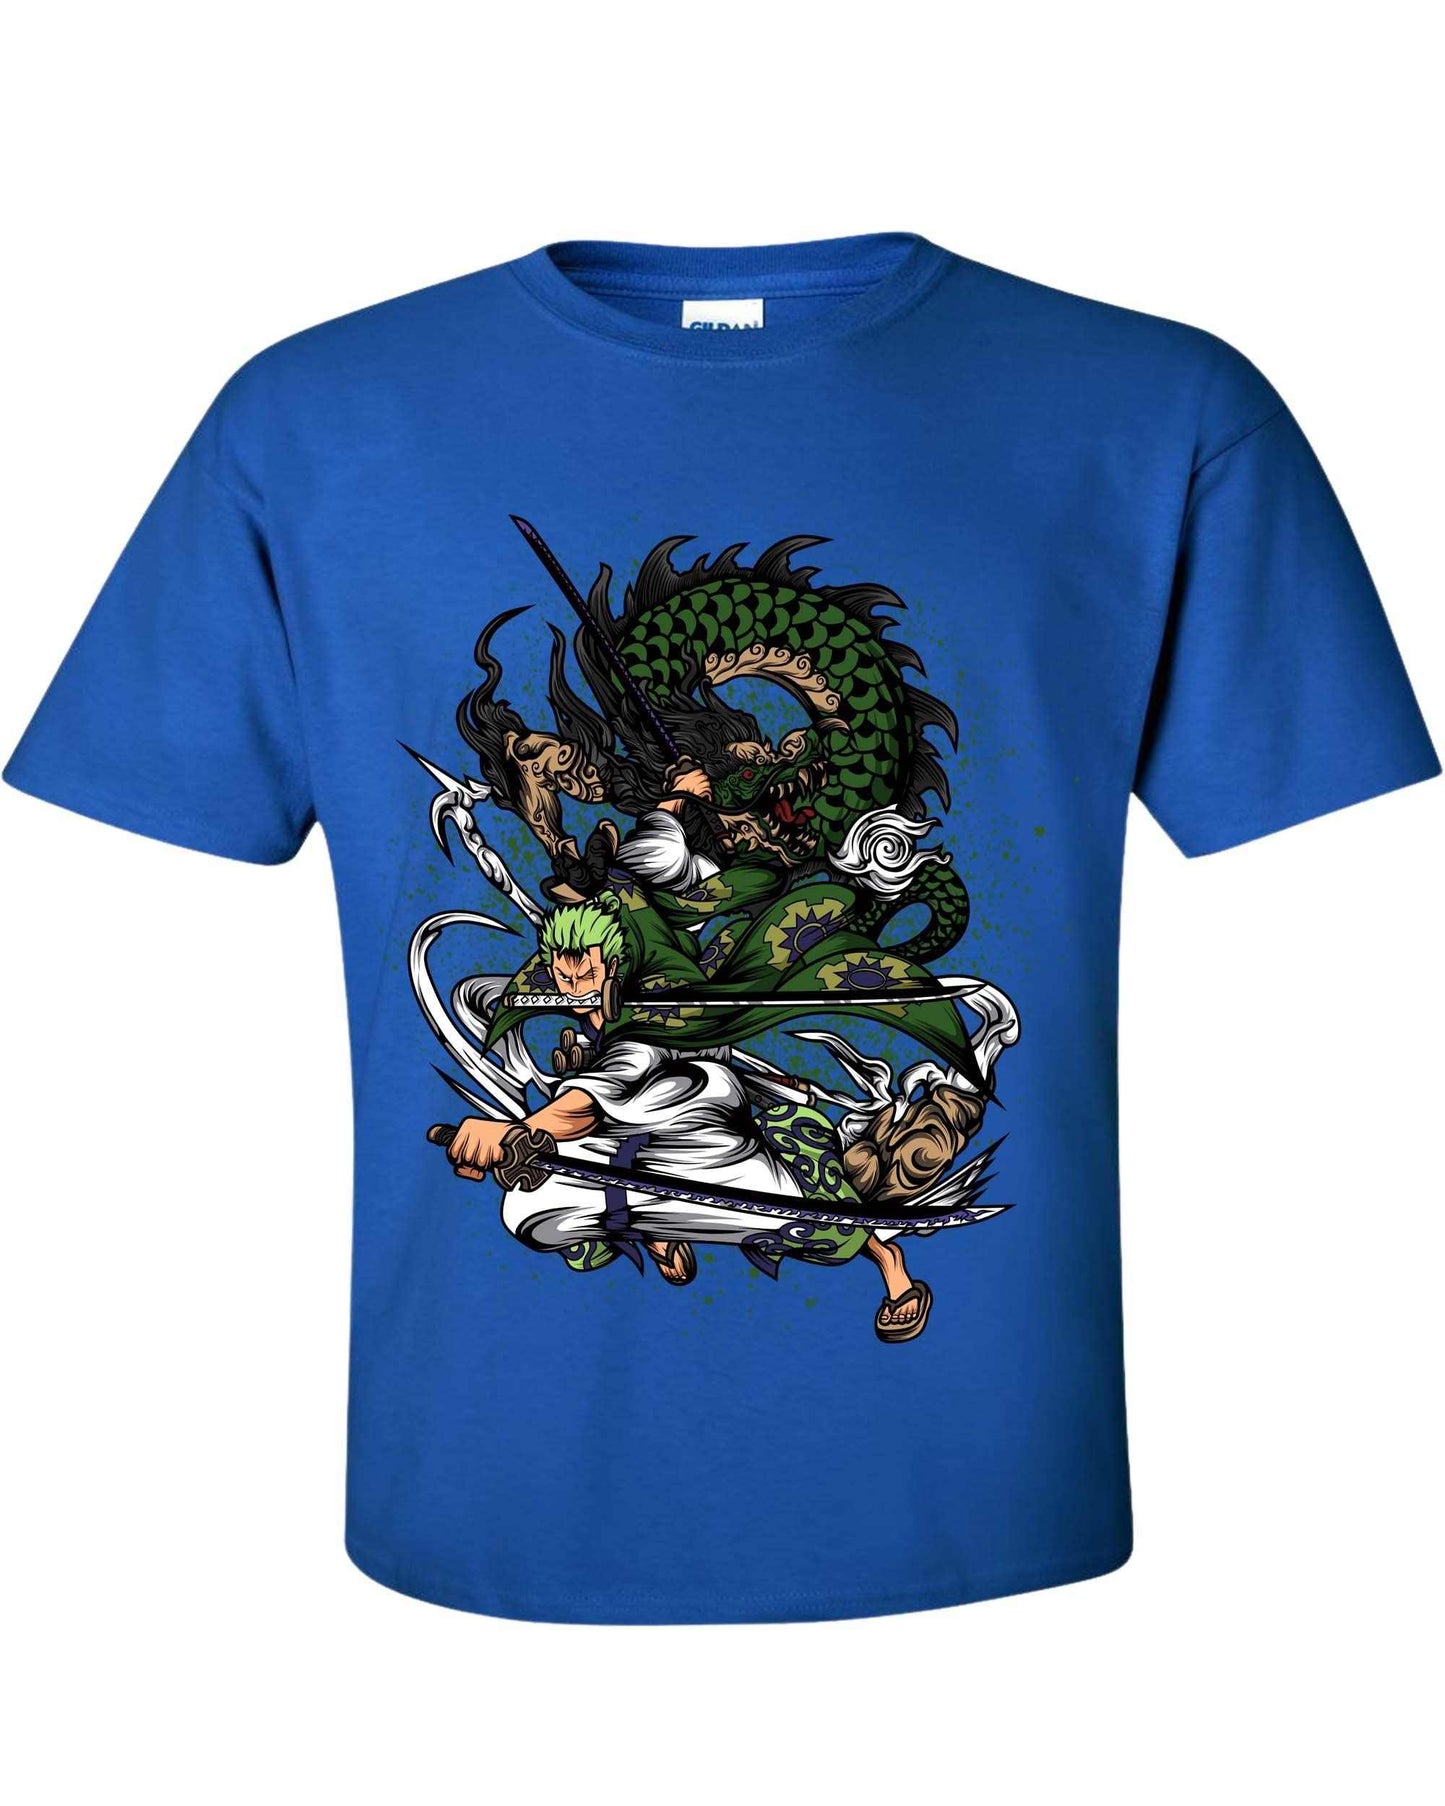 Zoro Anime T Shirt - Imagine With Aloha